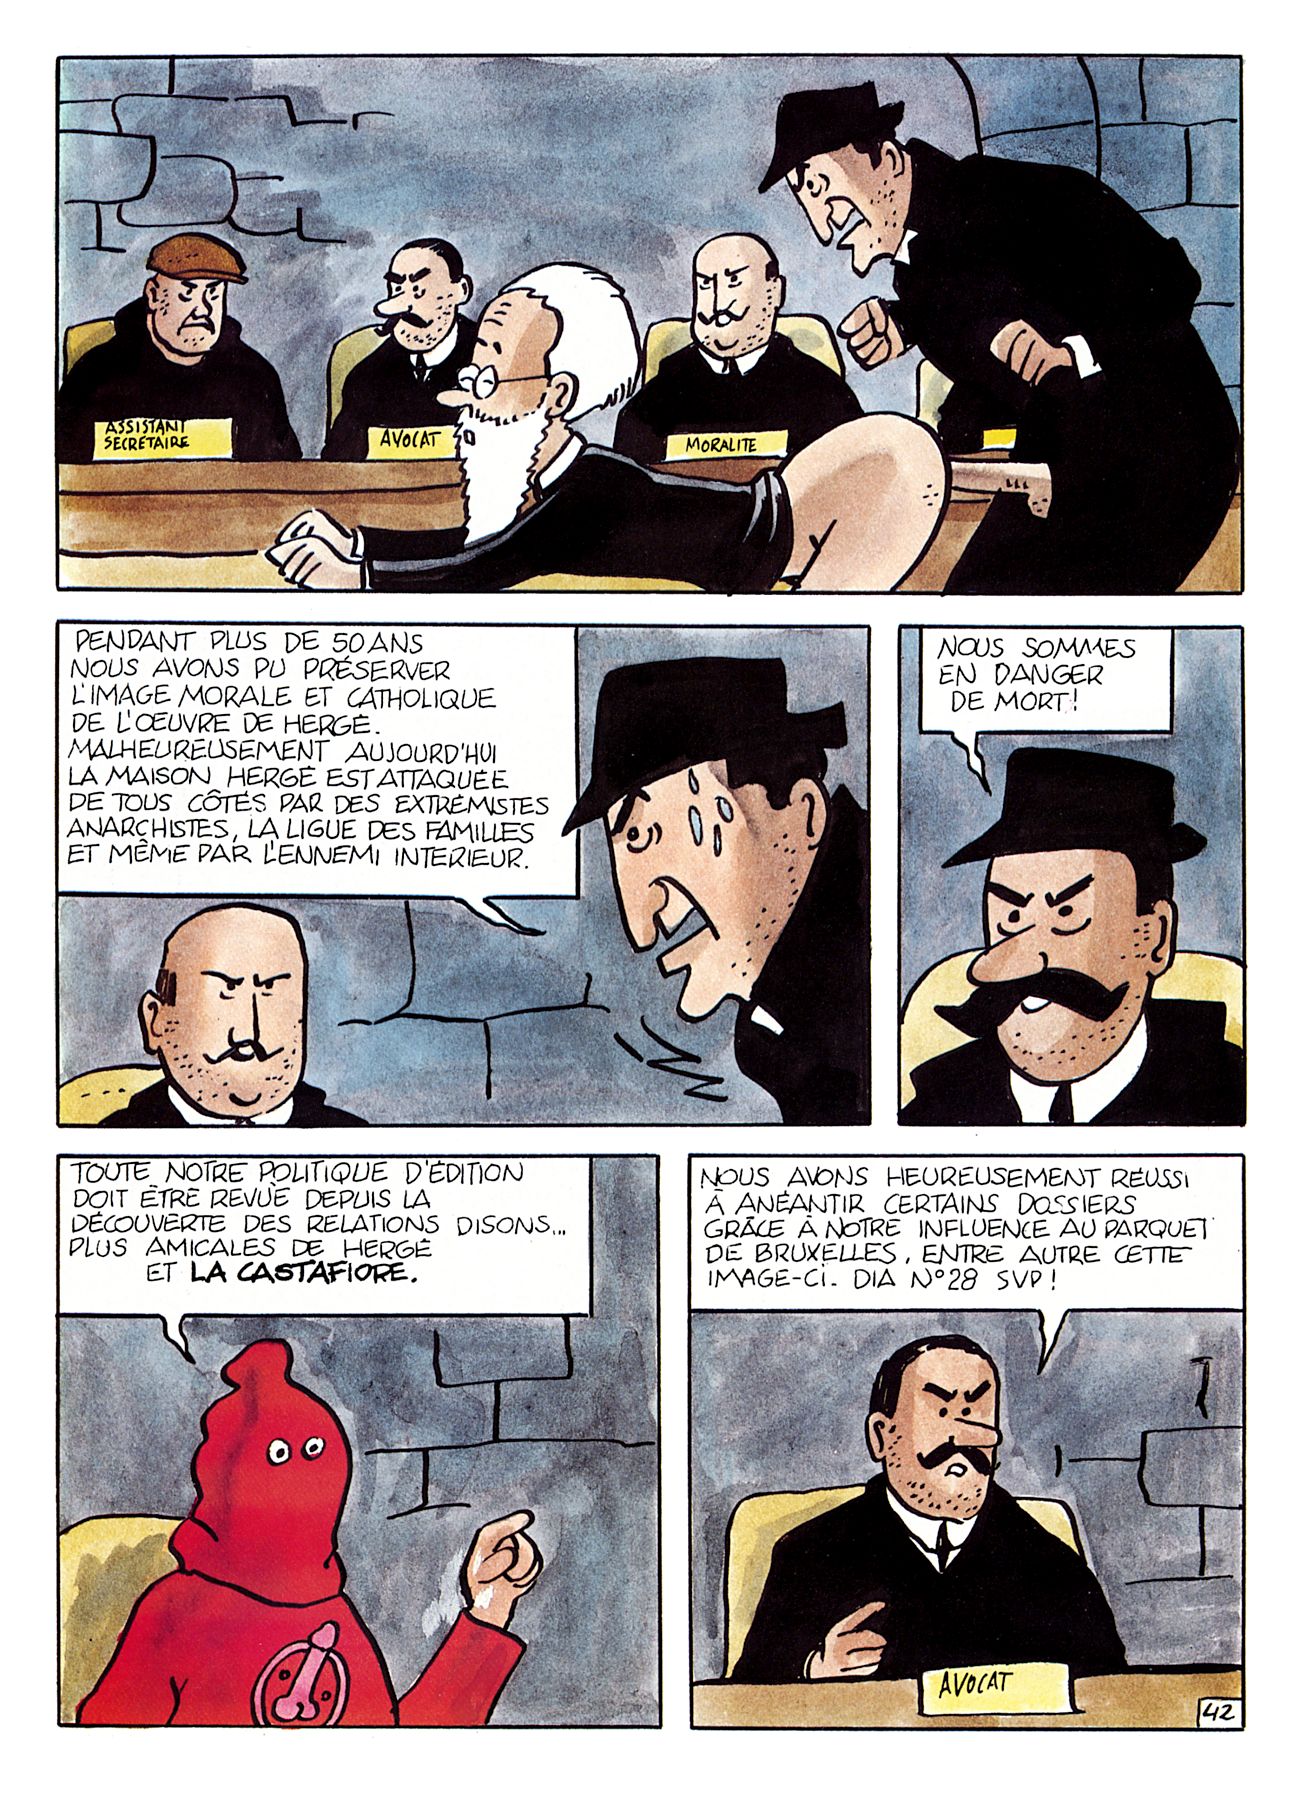 La-Vie-Sexuelle-De-Tintin-1992-All-64-pages-French-page42--Gotofap.tk--49270287.jpg